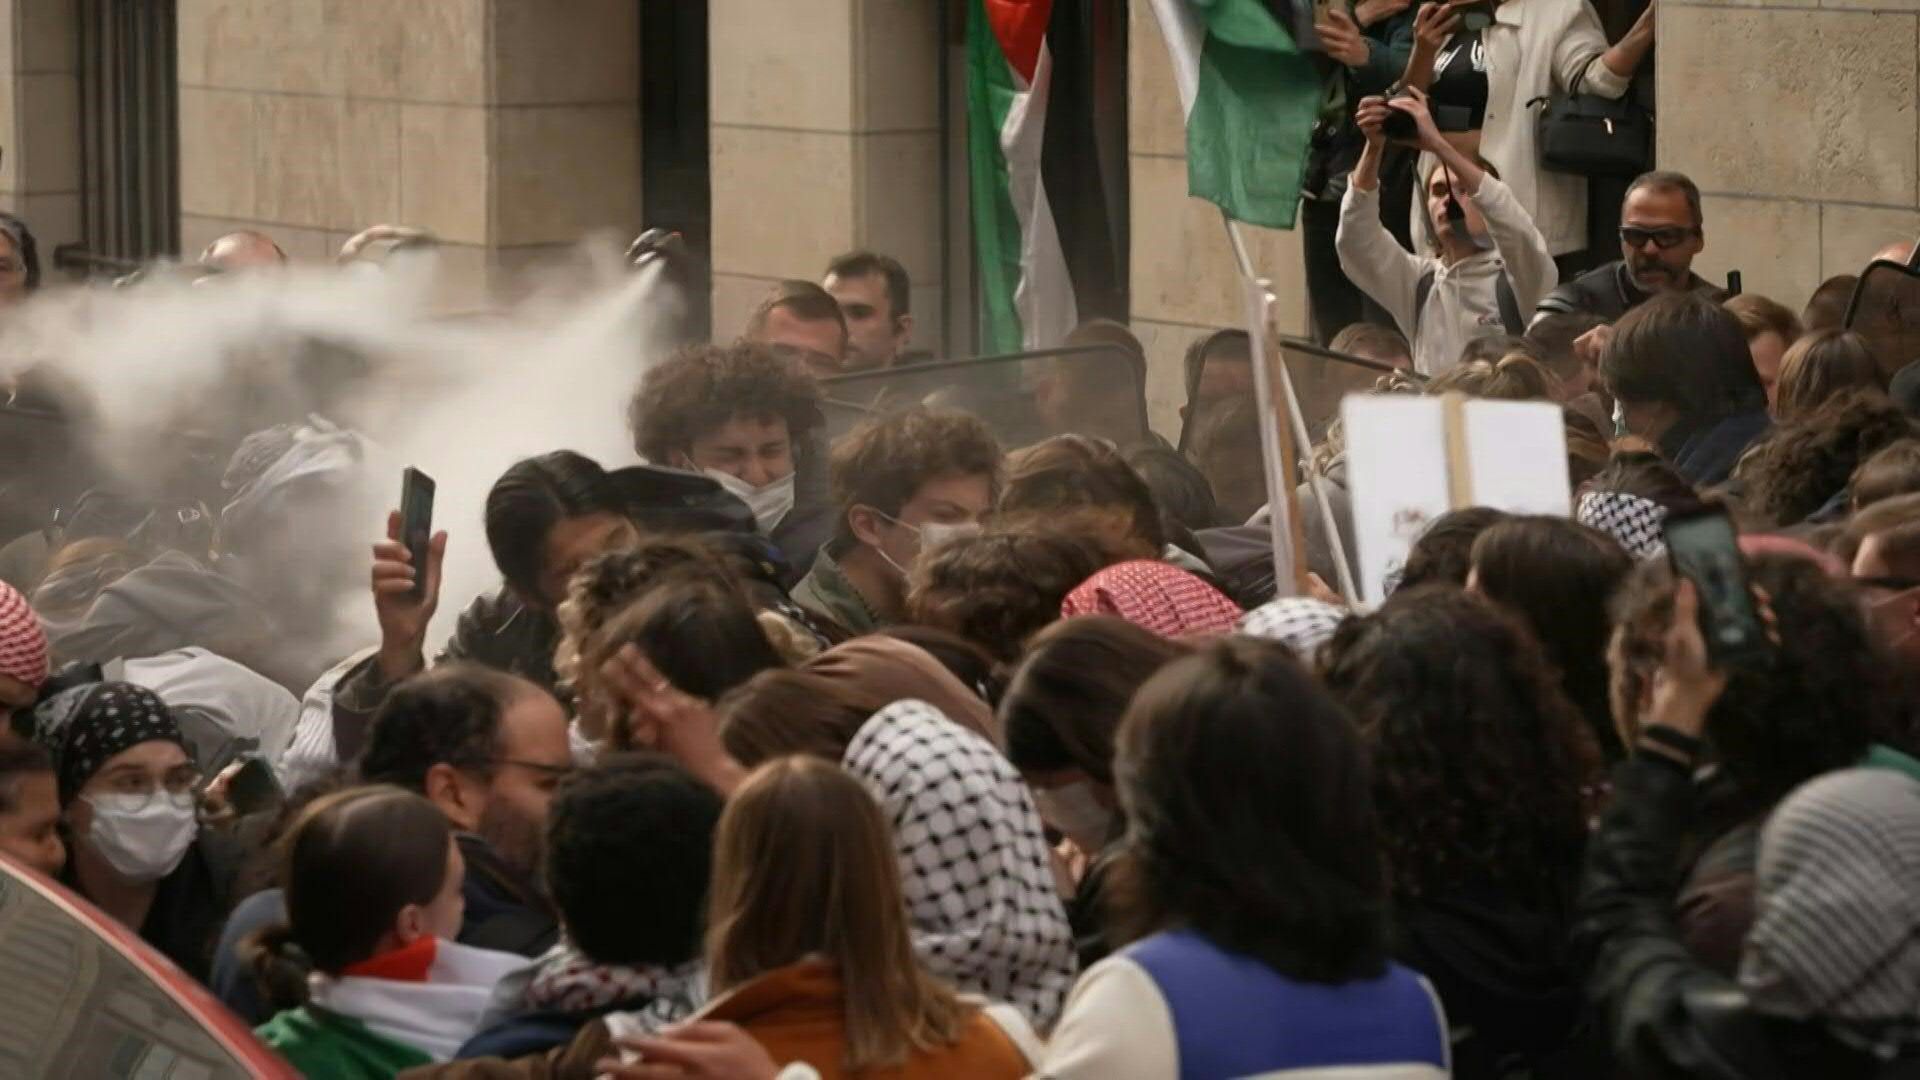 Paris: Police break up pro-Palestinian rally outside Sorbonne University